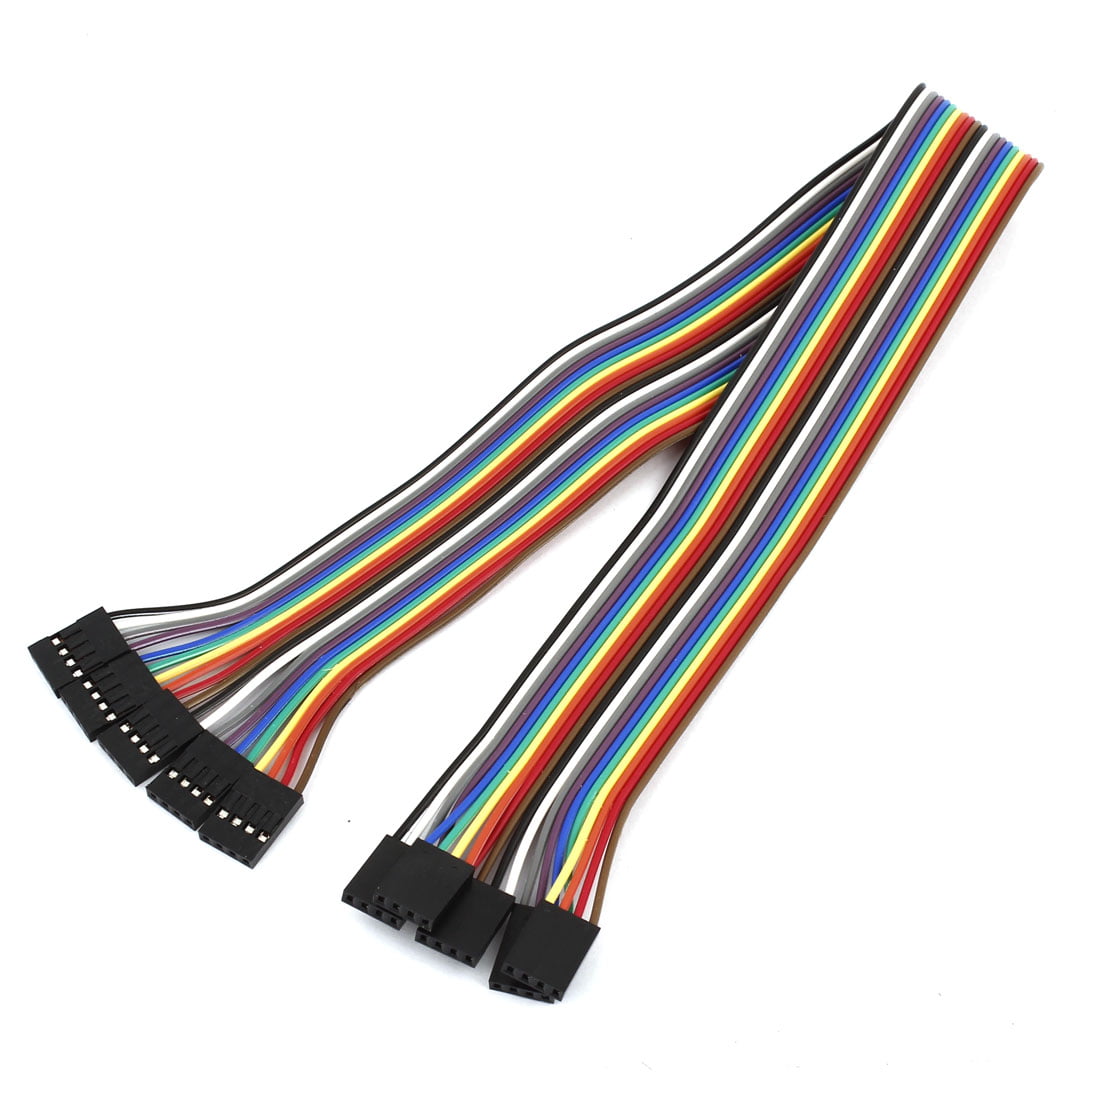 50cm 2.54mm F/F 2 Pin Solderless Colored Flexible Breadboard Jumper Wire 5 Pcs 